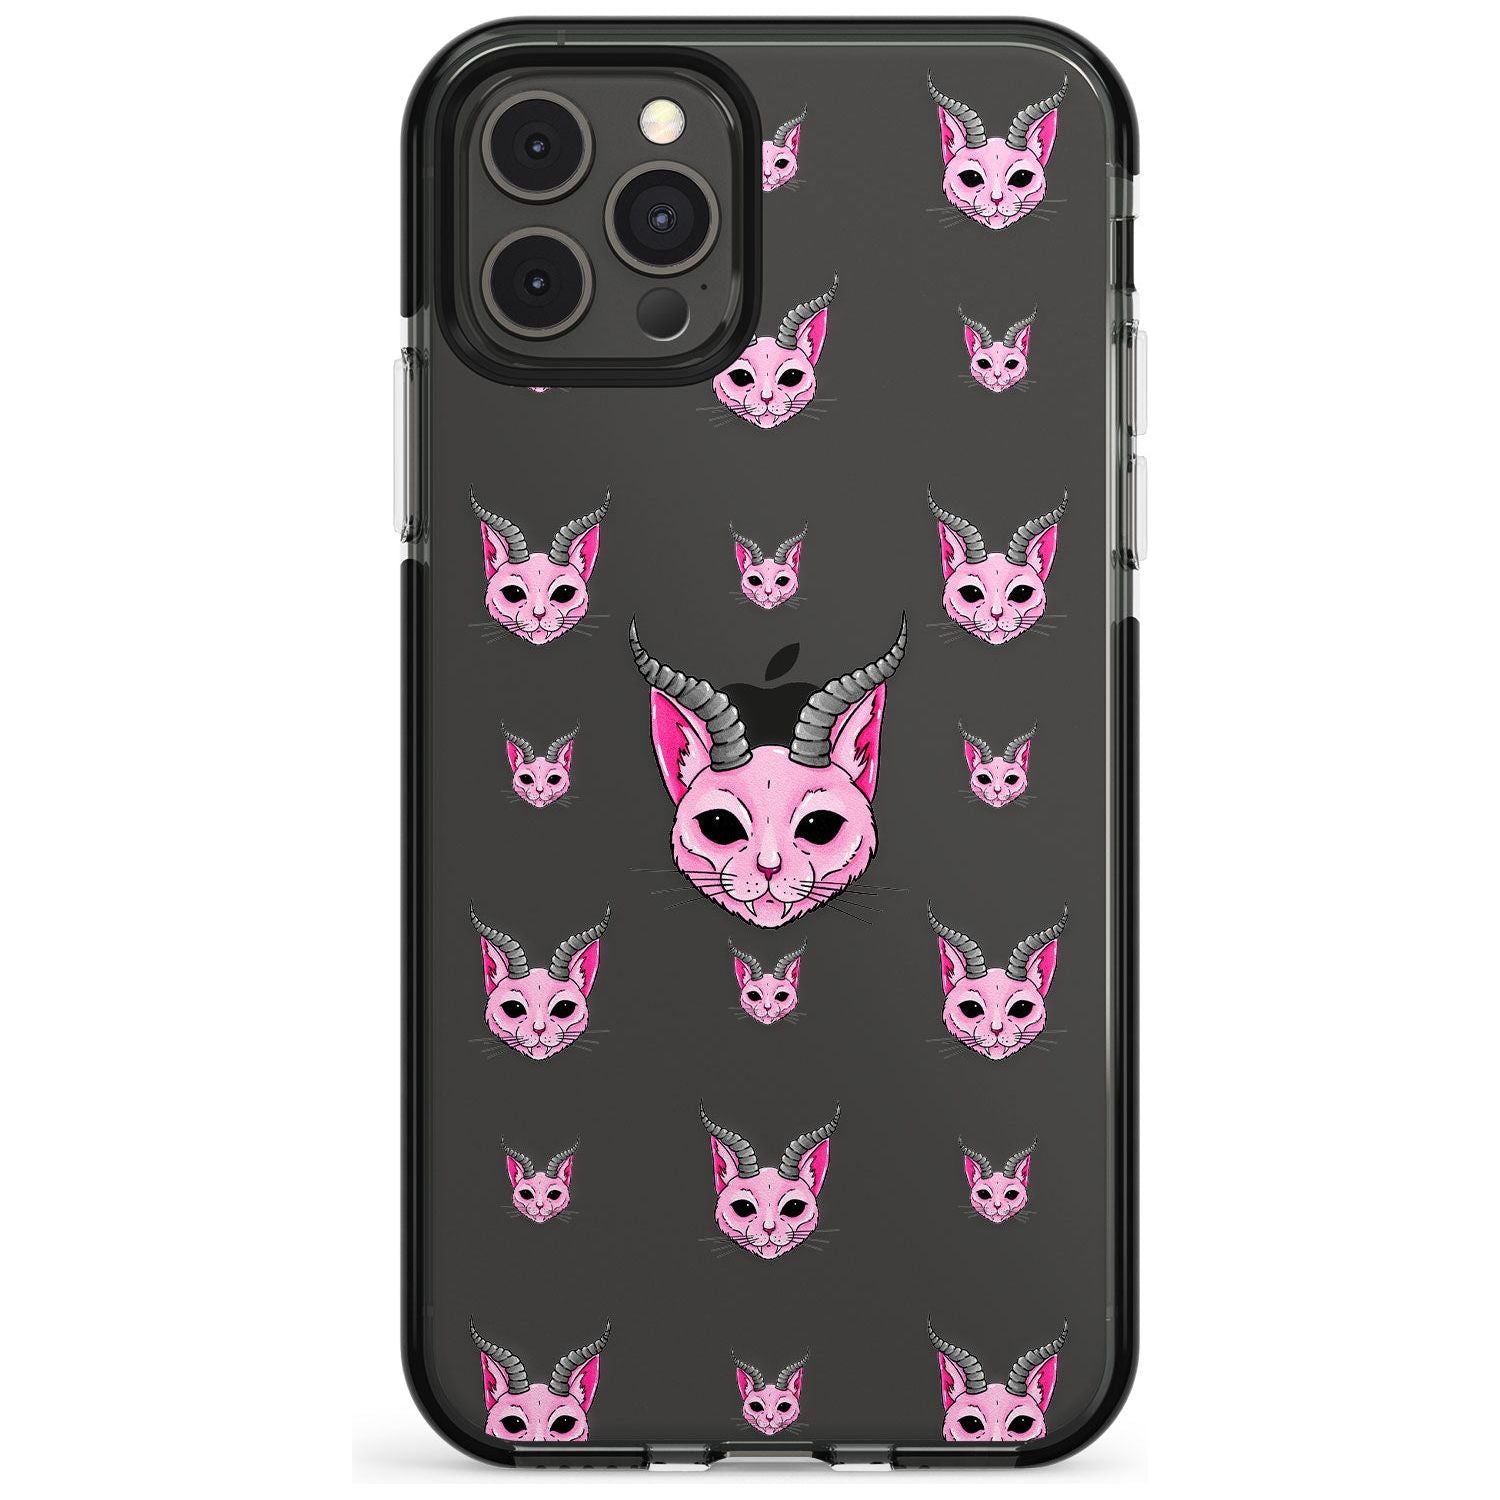 Demon Cat Pattern Black Impact Phone Case for iPhone 11